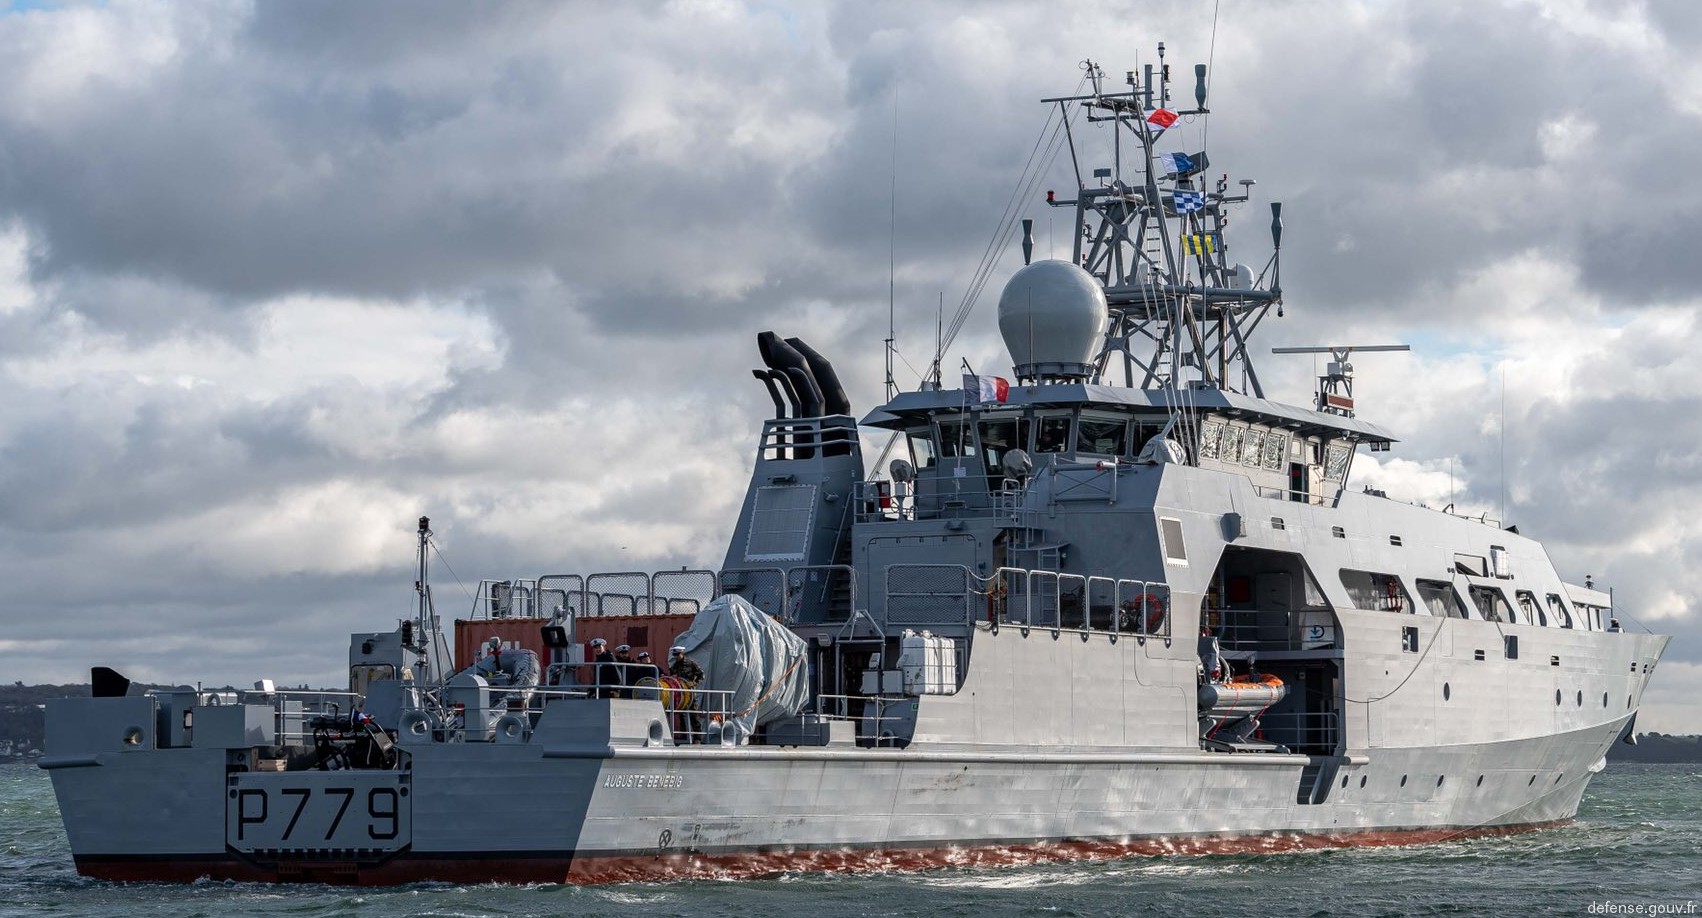 p-779 fs auguste benebig patrouilleur outre-mer pom offshore patrol vessel opv french navy marine nationale noumea 03